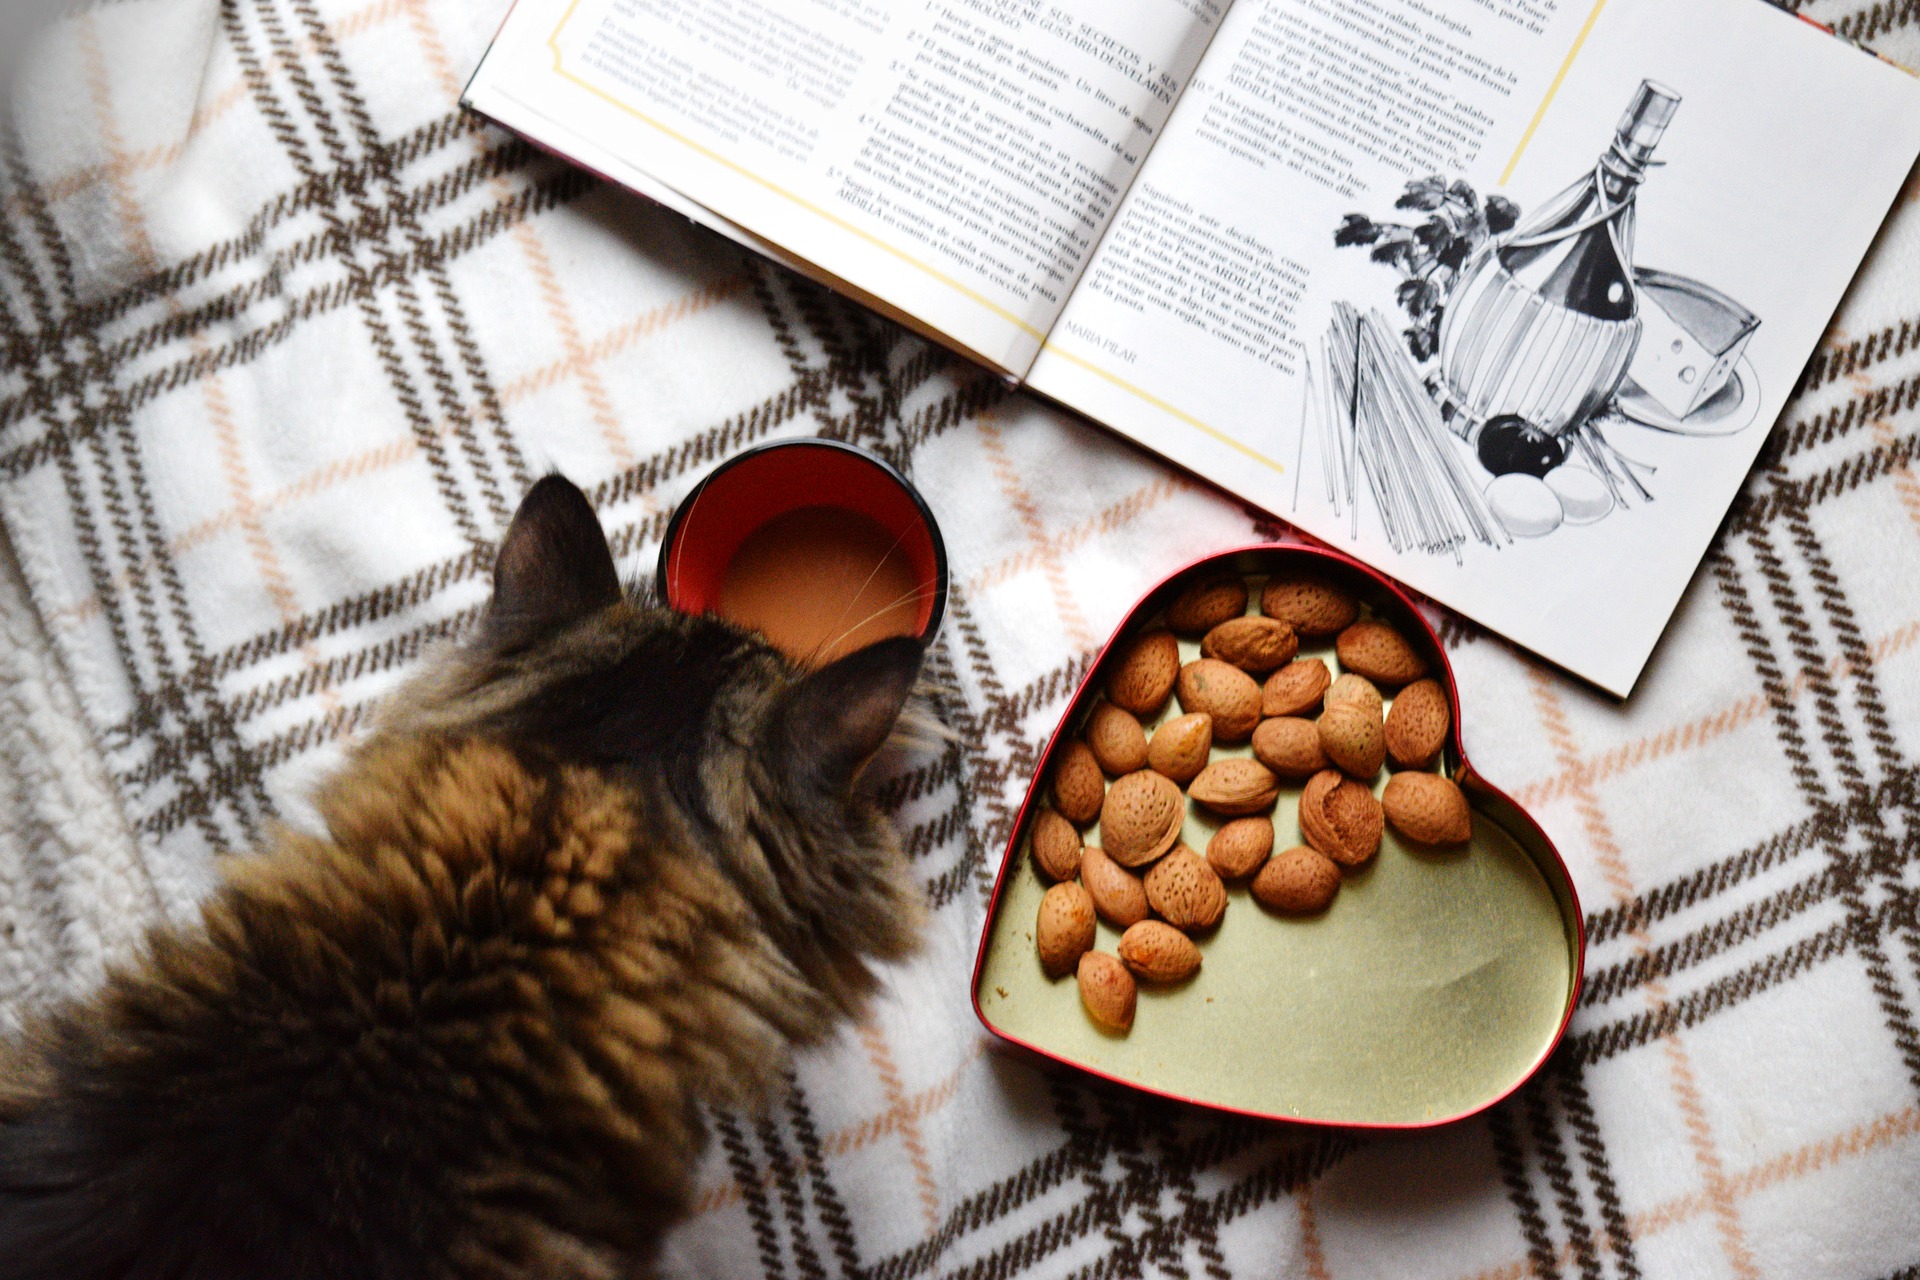 Cat looking at cookbook